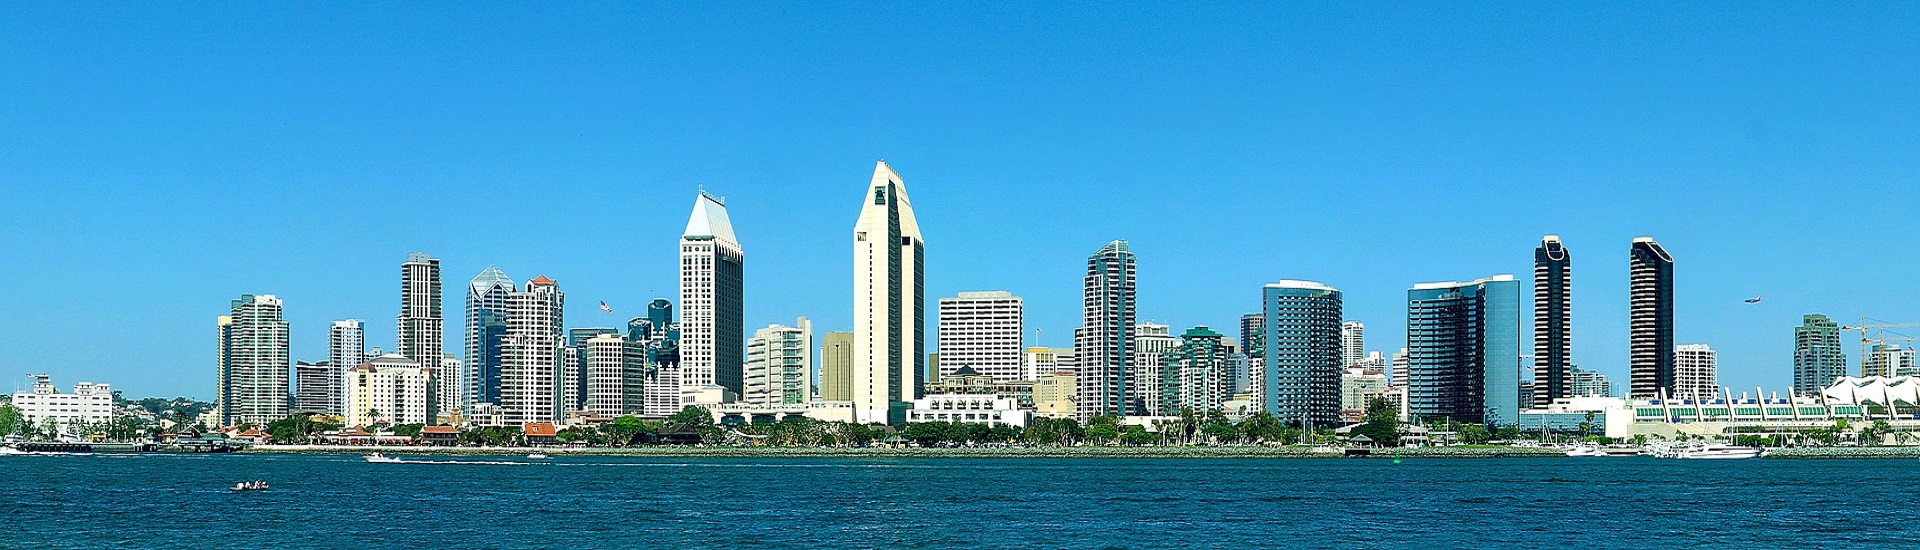 San Diego Downtown Skyline during daytime